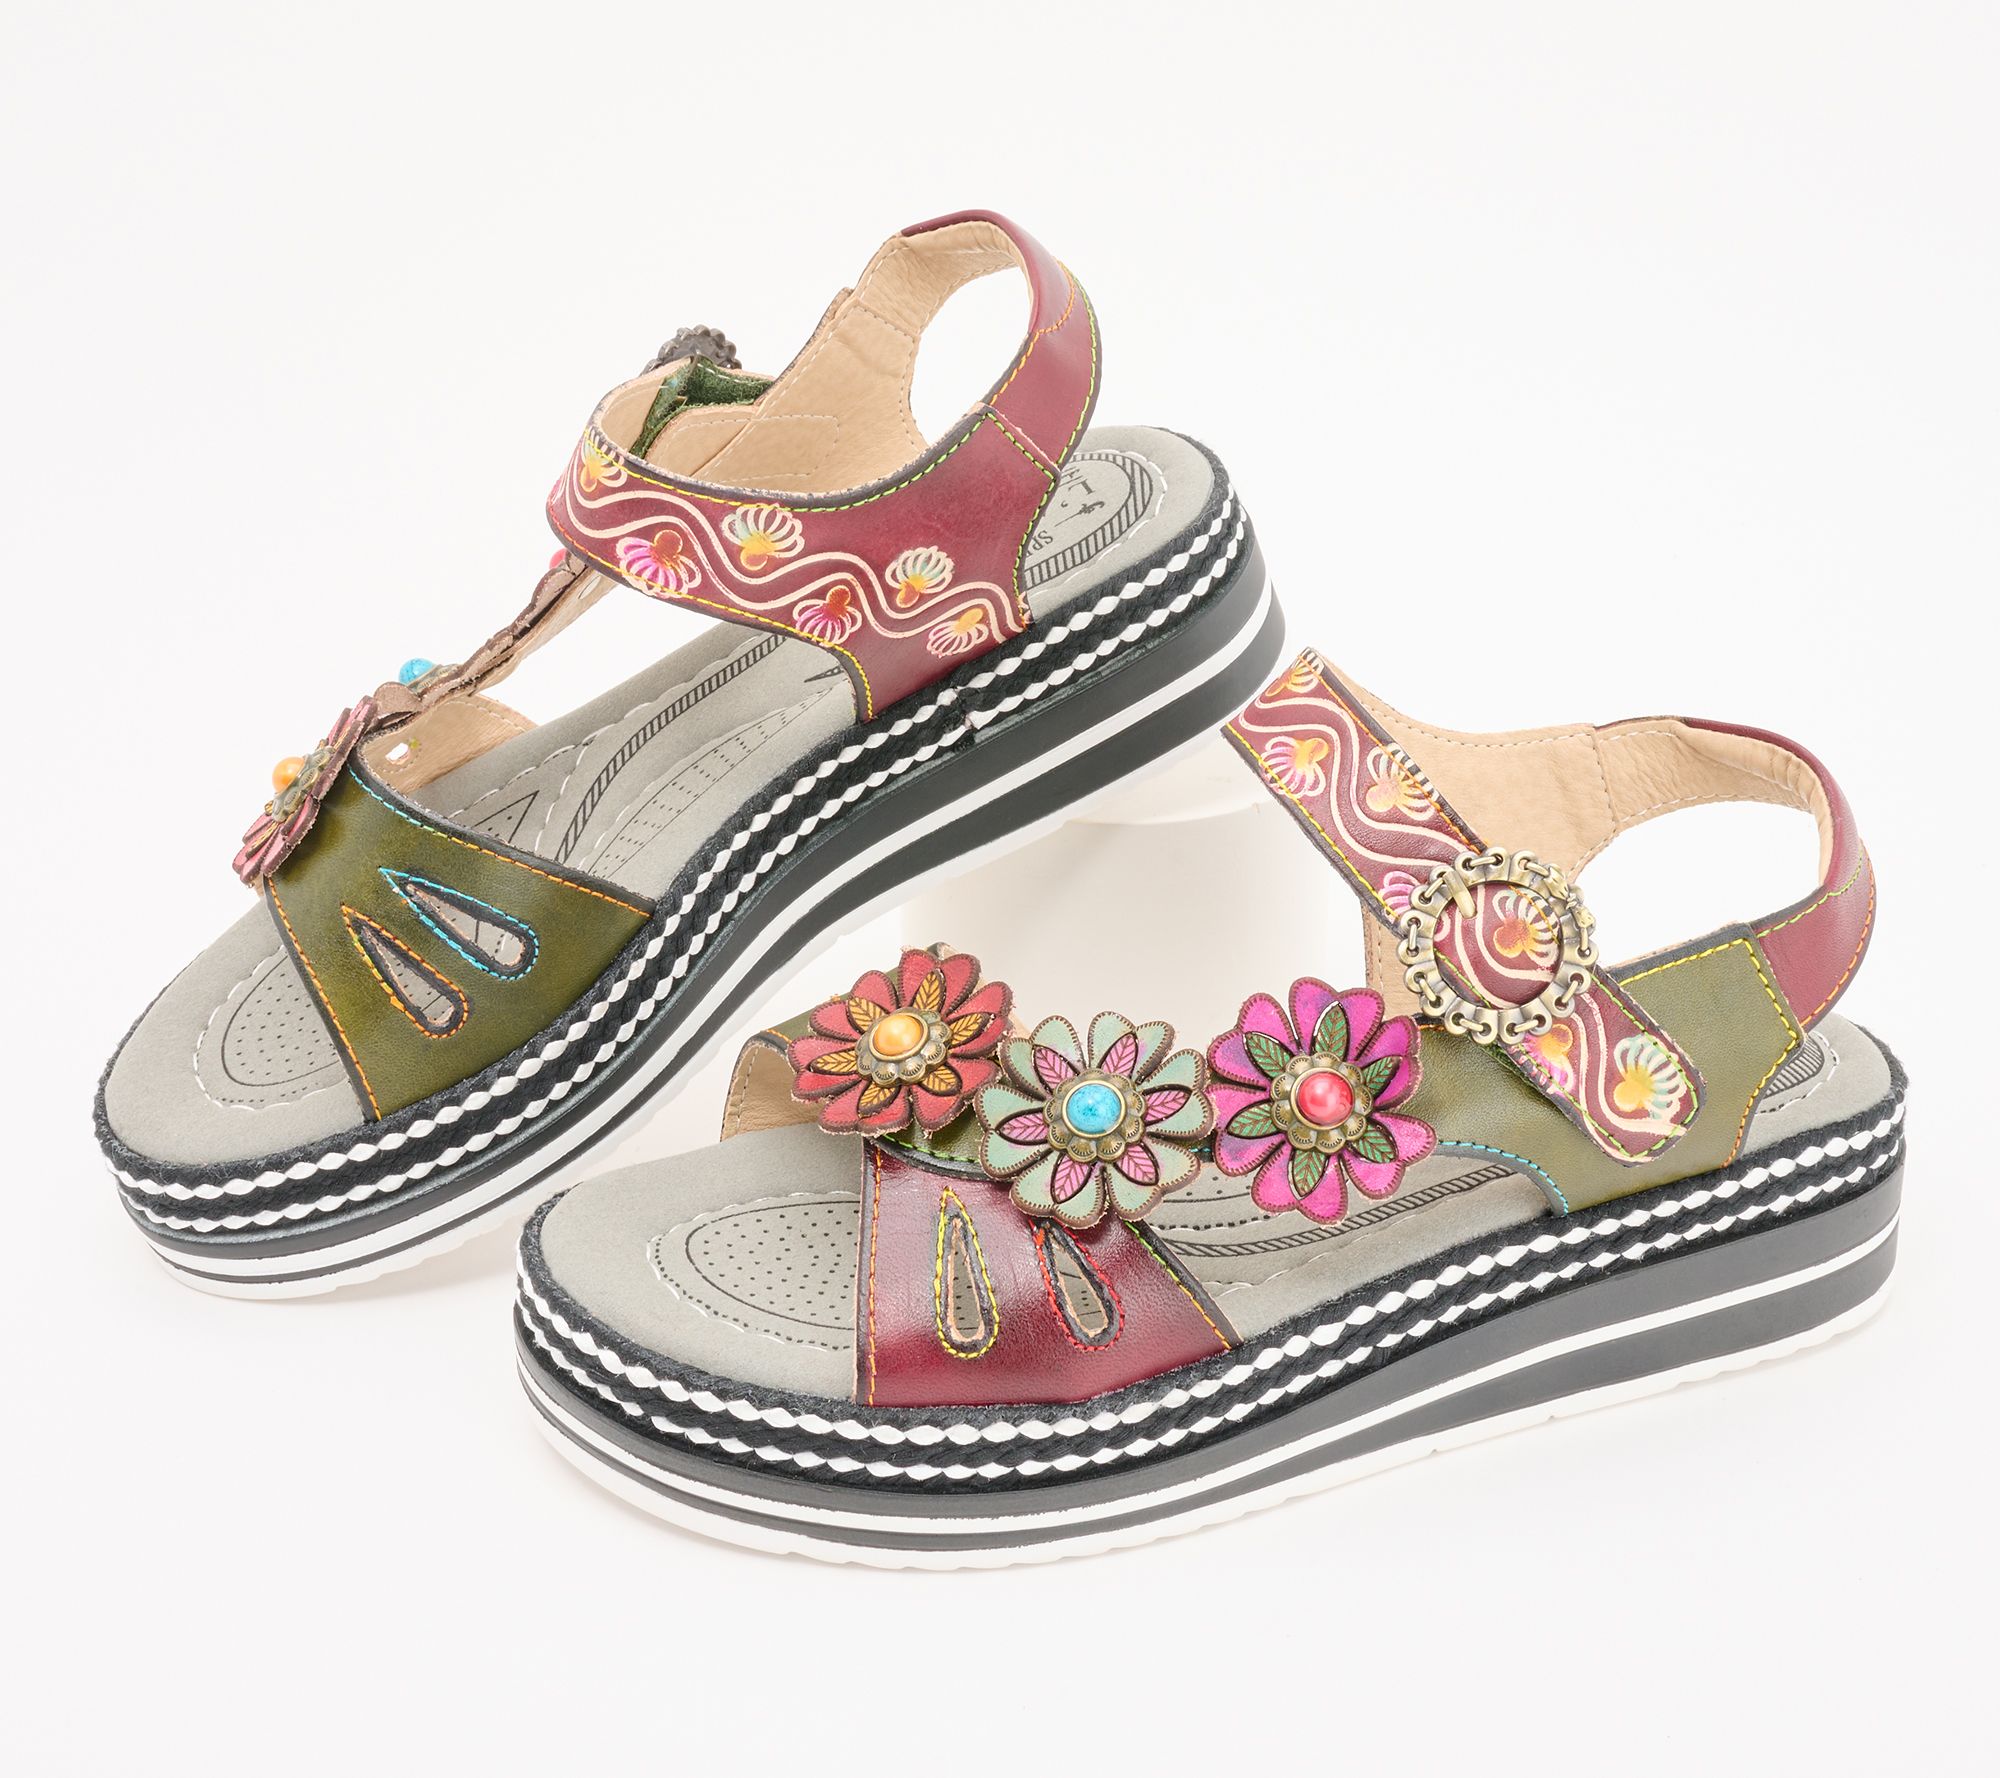 Spring Step Suede Floral Wedge Sandals - Laylani 